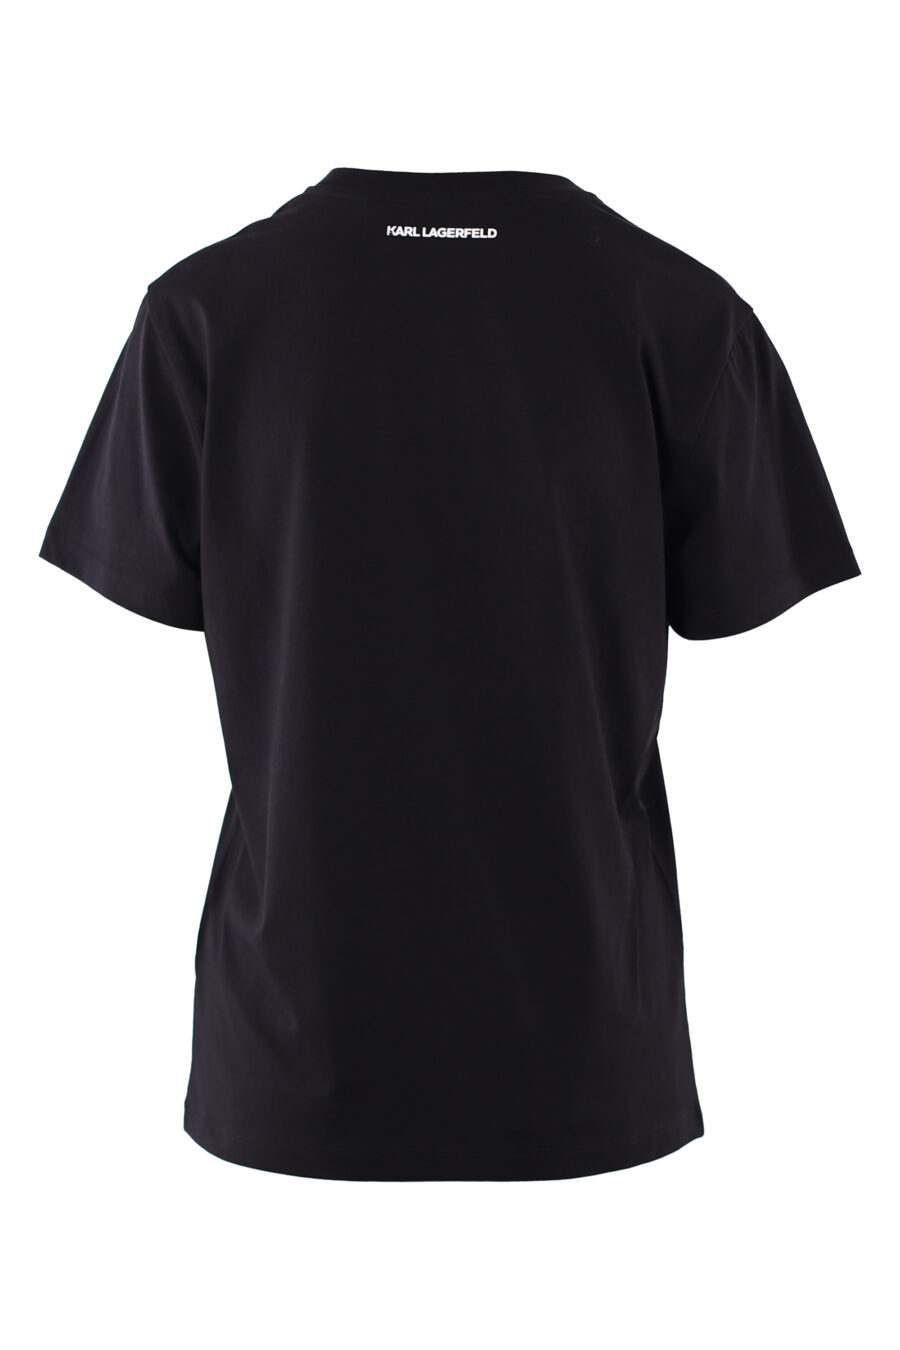 Camiseta negra con logo monograma en cuadrado - IMG 6132